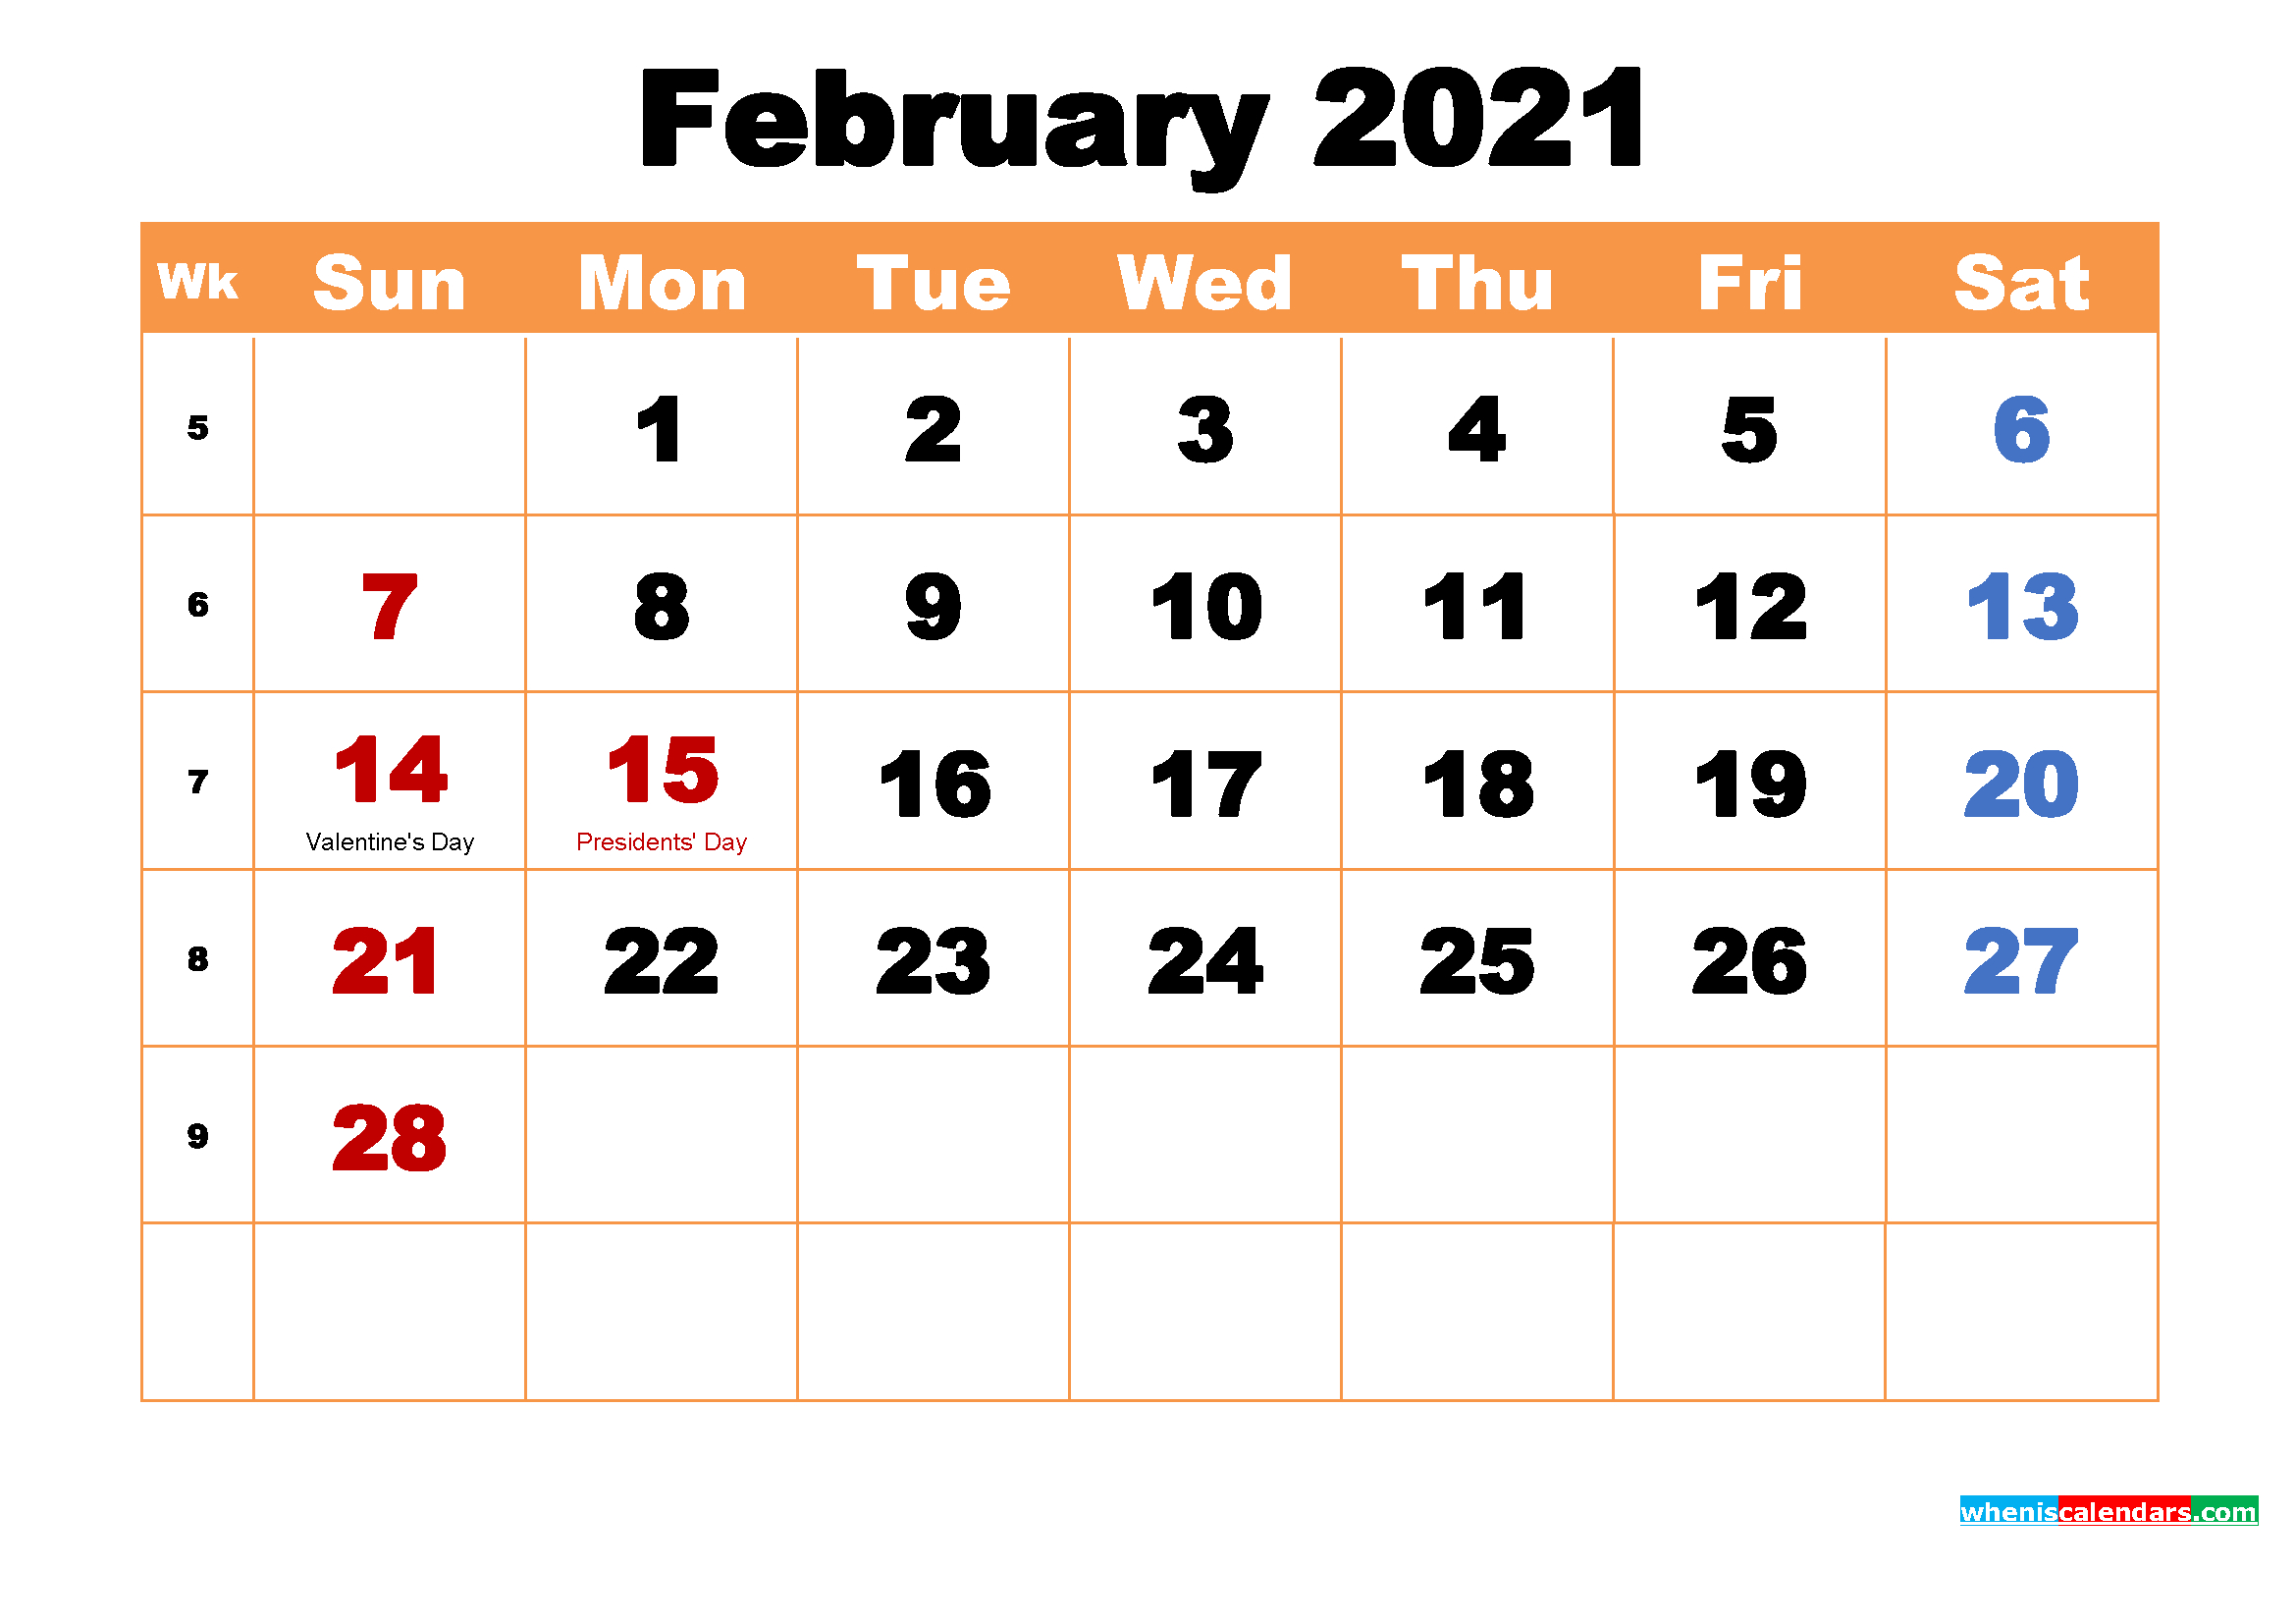 February 2021 Calendar Wallpapers - Top Free February 2021